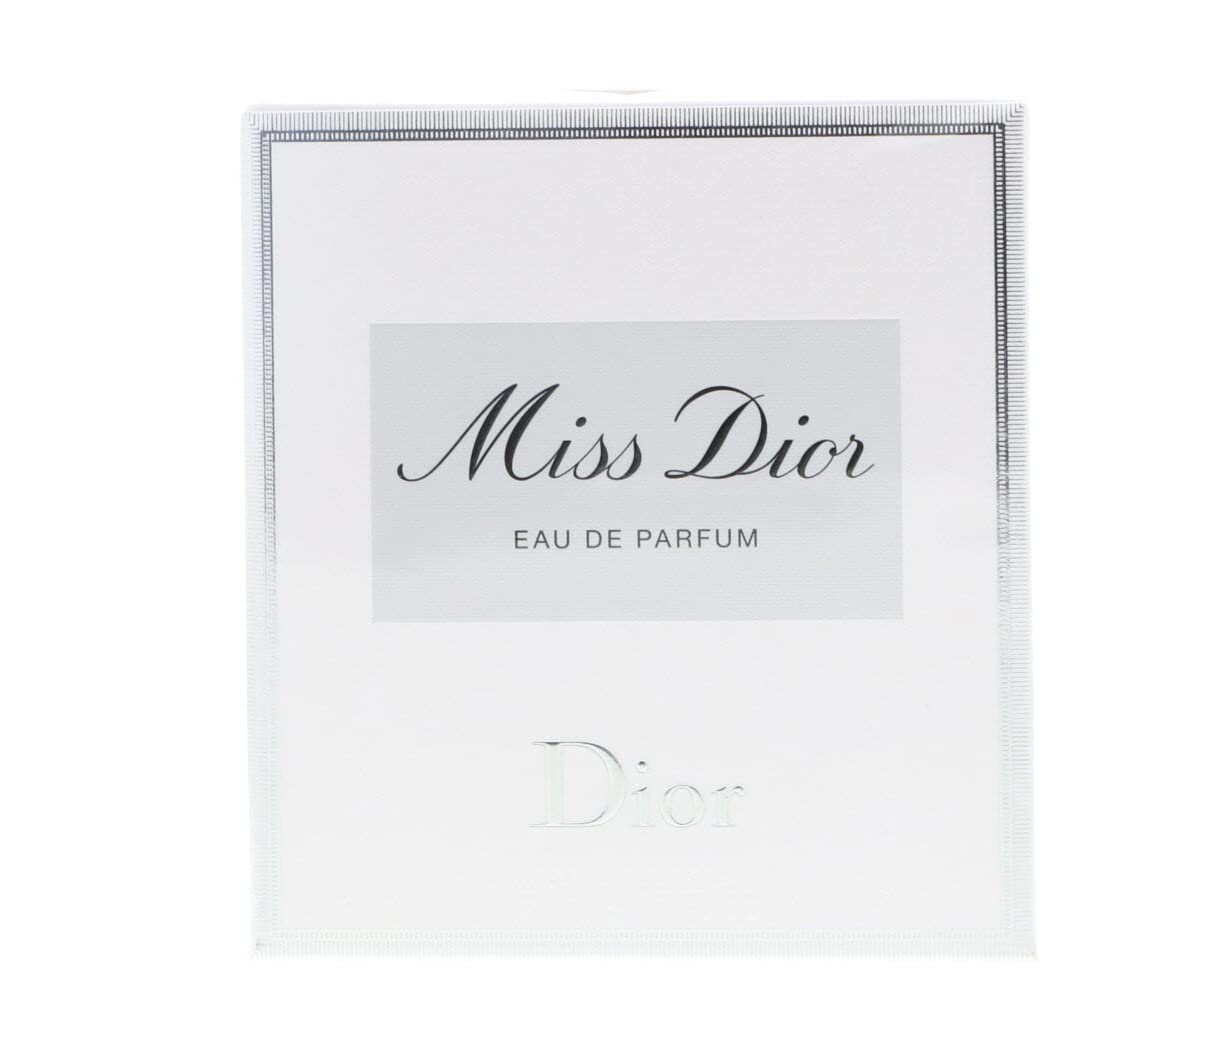 NEW  Miss Dior Eau de Parfum the fresh and flowery fragrance  DIOR US